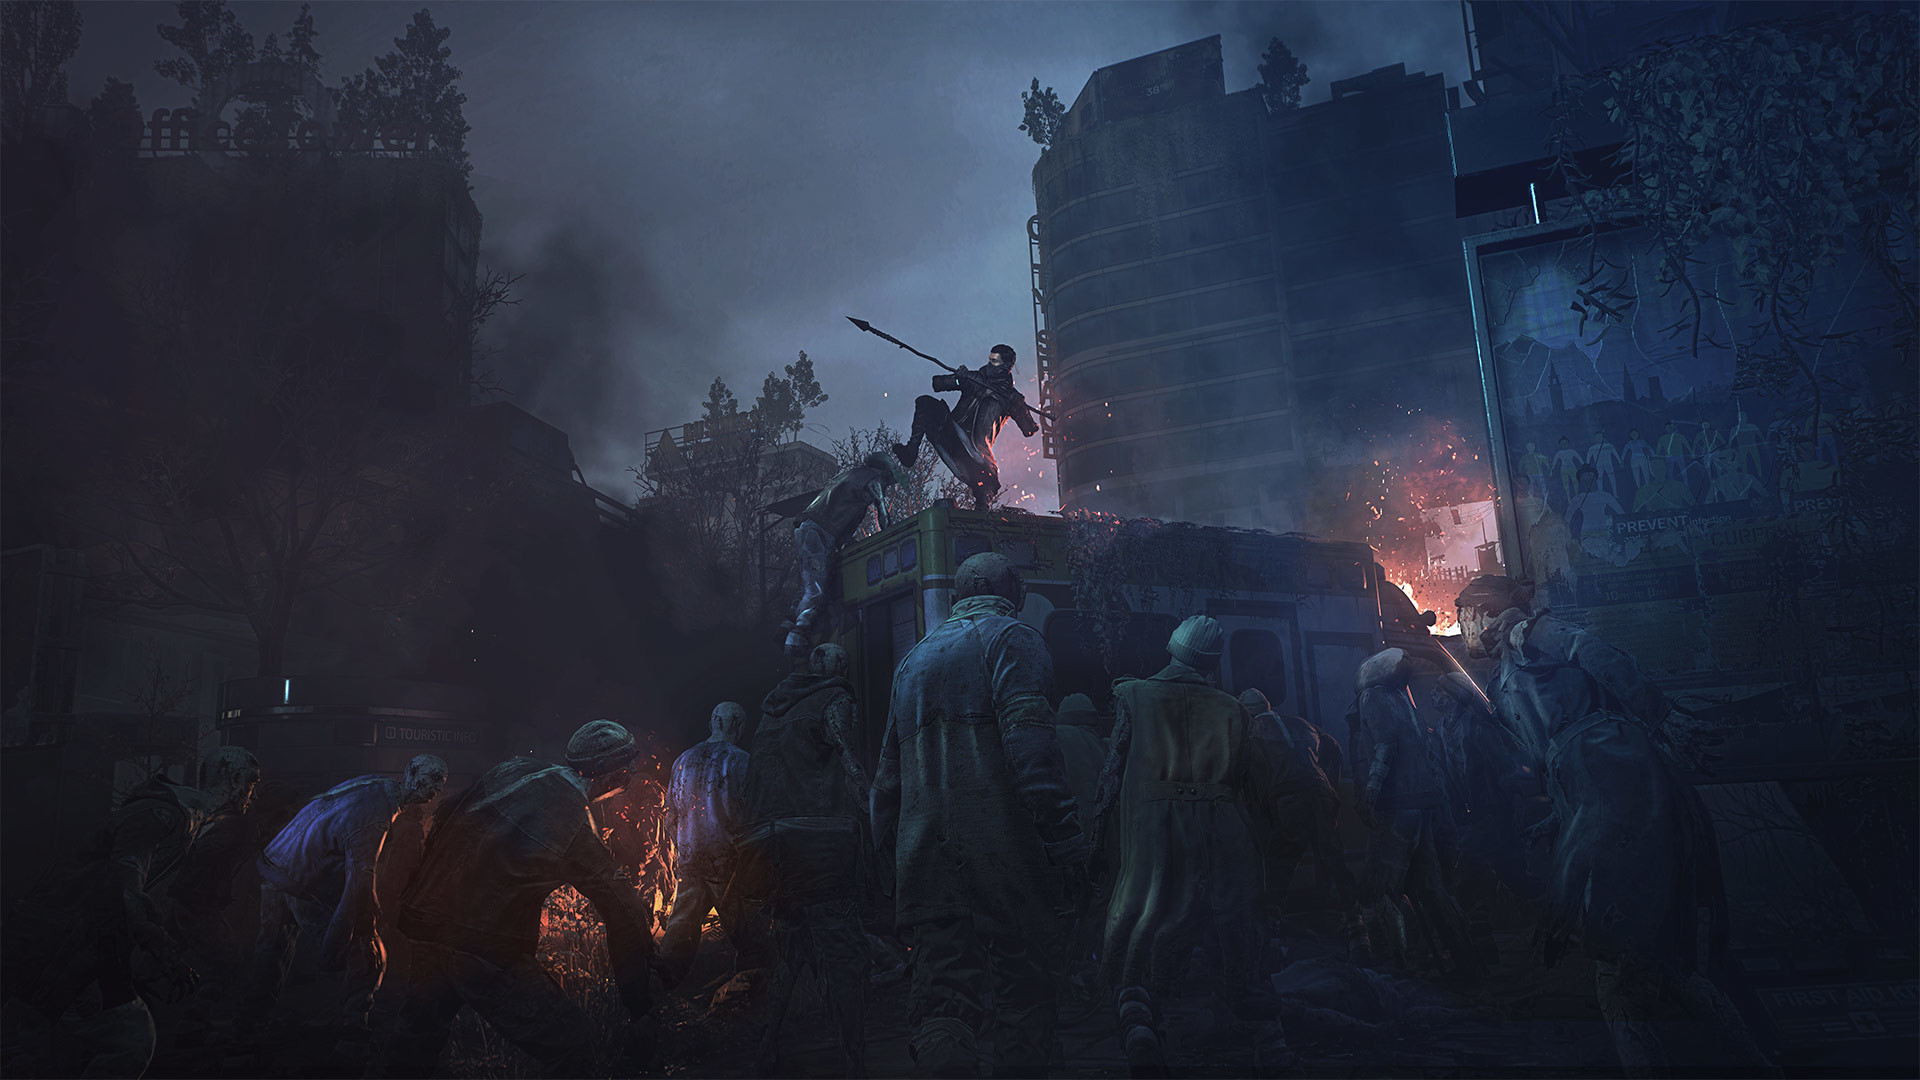 Dying Light 2: The Kotaku Review